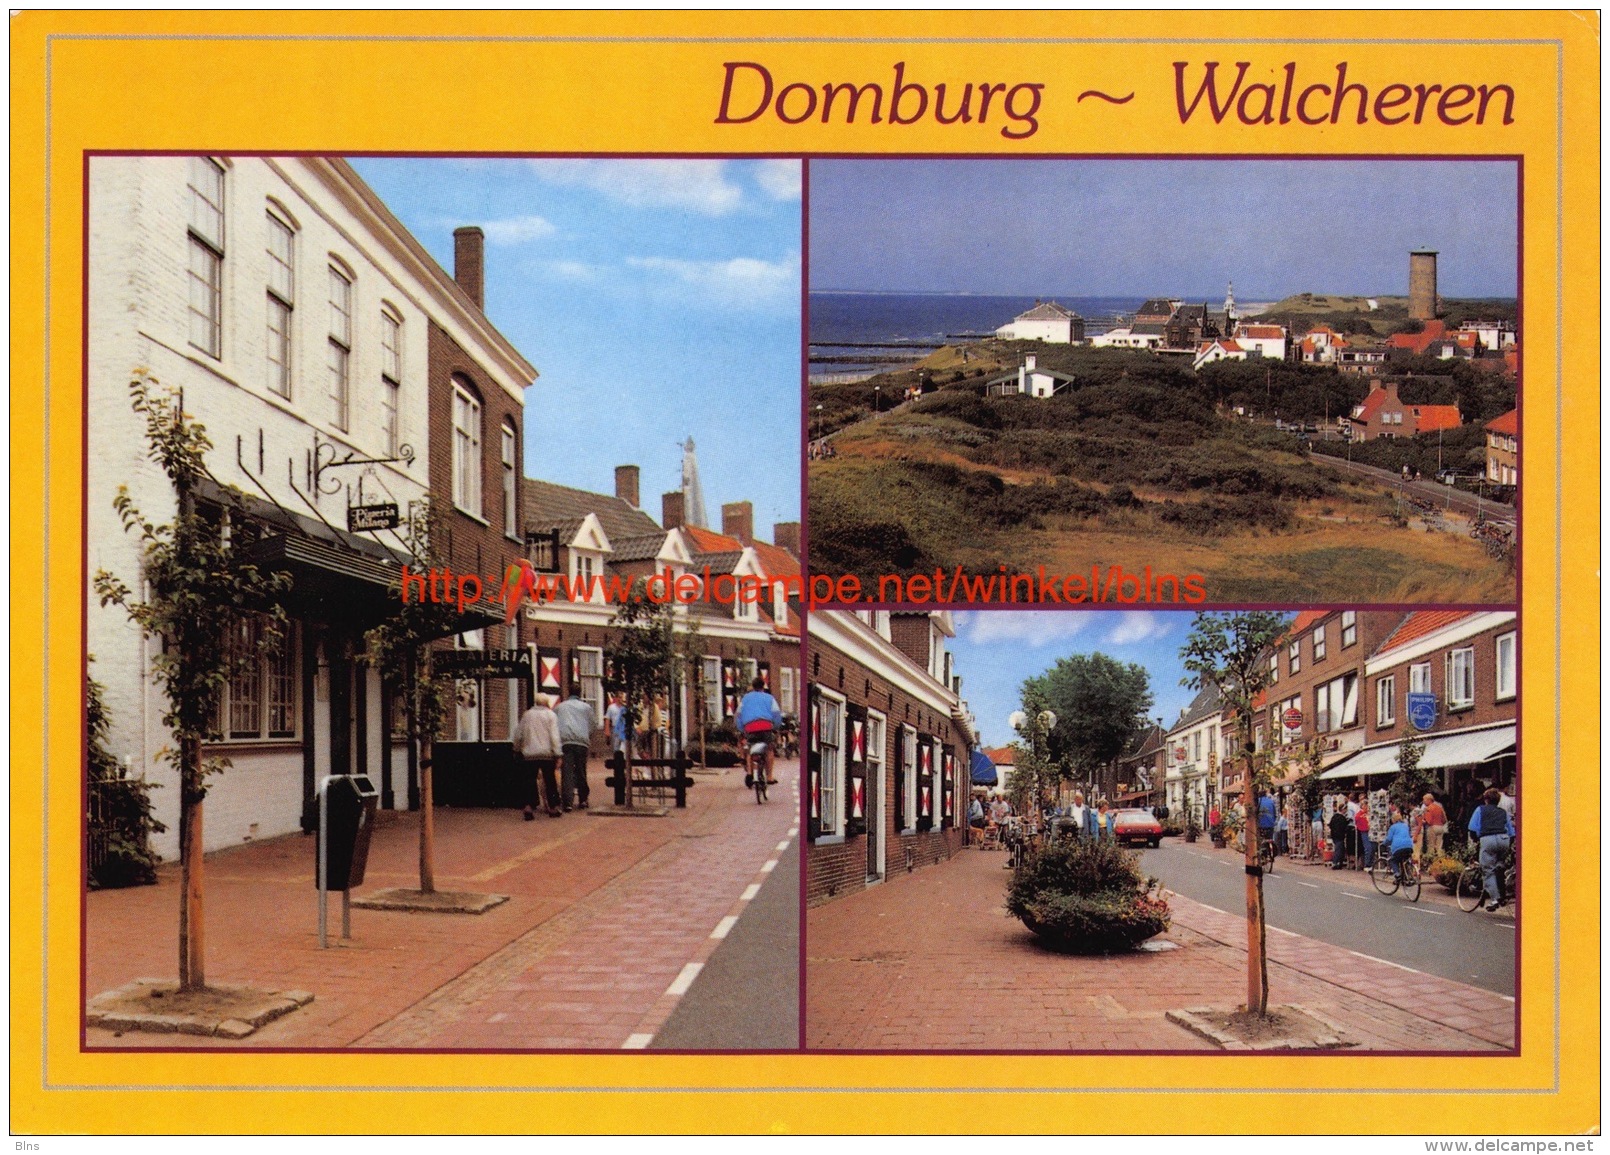 Domburg - Domburg